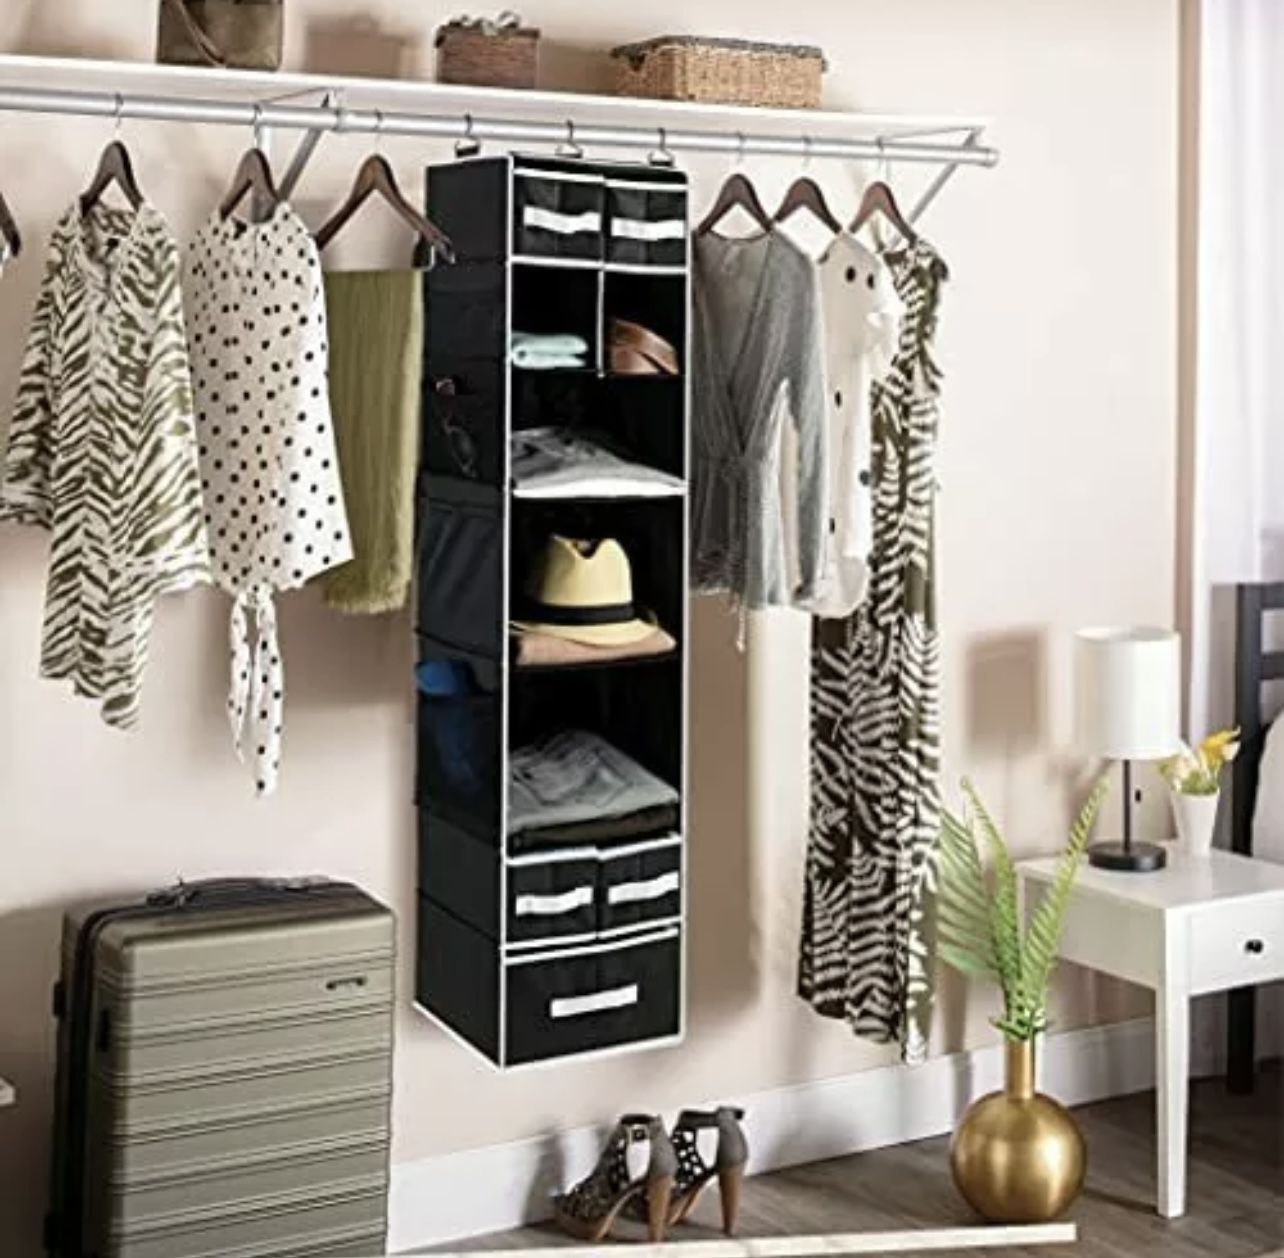 BRAND NEW 9 Shelf Hanging Closet Organizer System with 5 Drawers, 7 Shelves, 8 Mesh Pockets - Measures 12”x12”x52” High